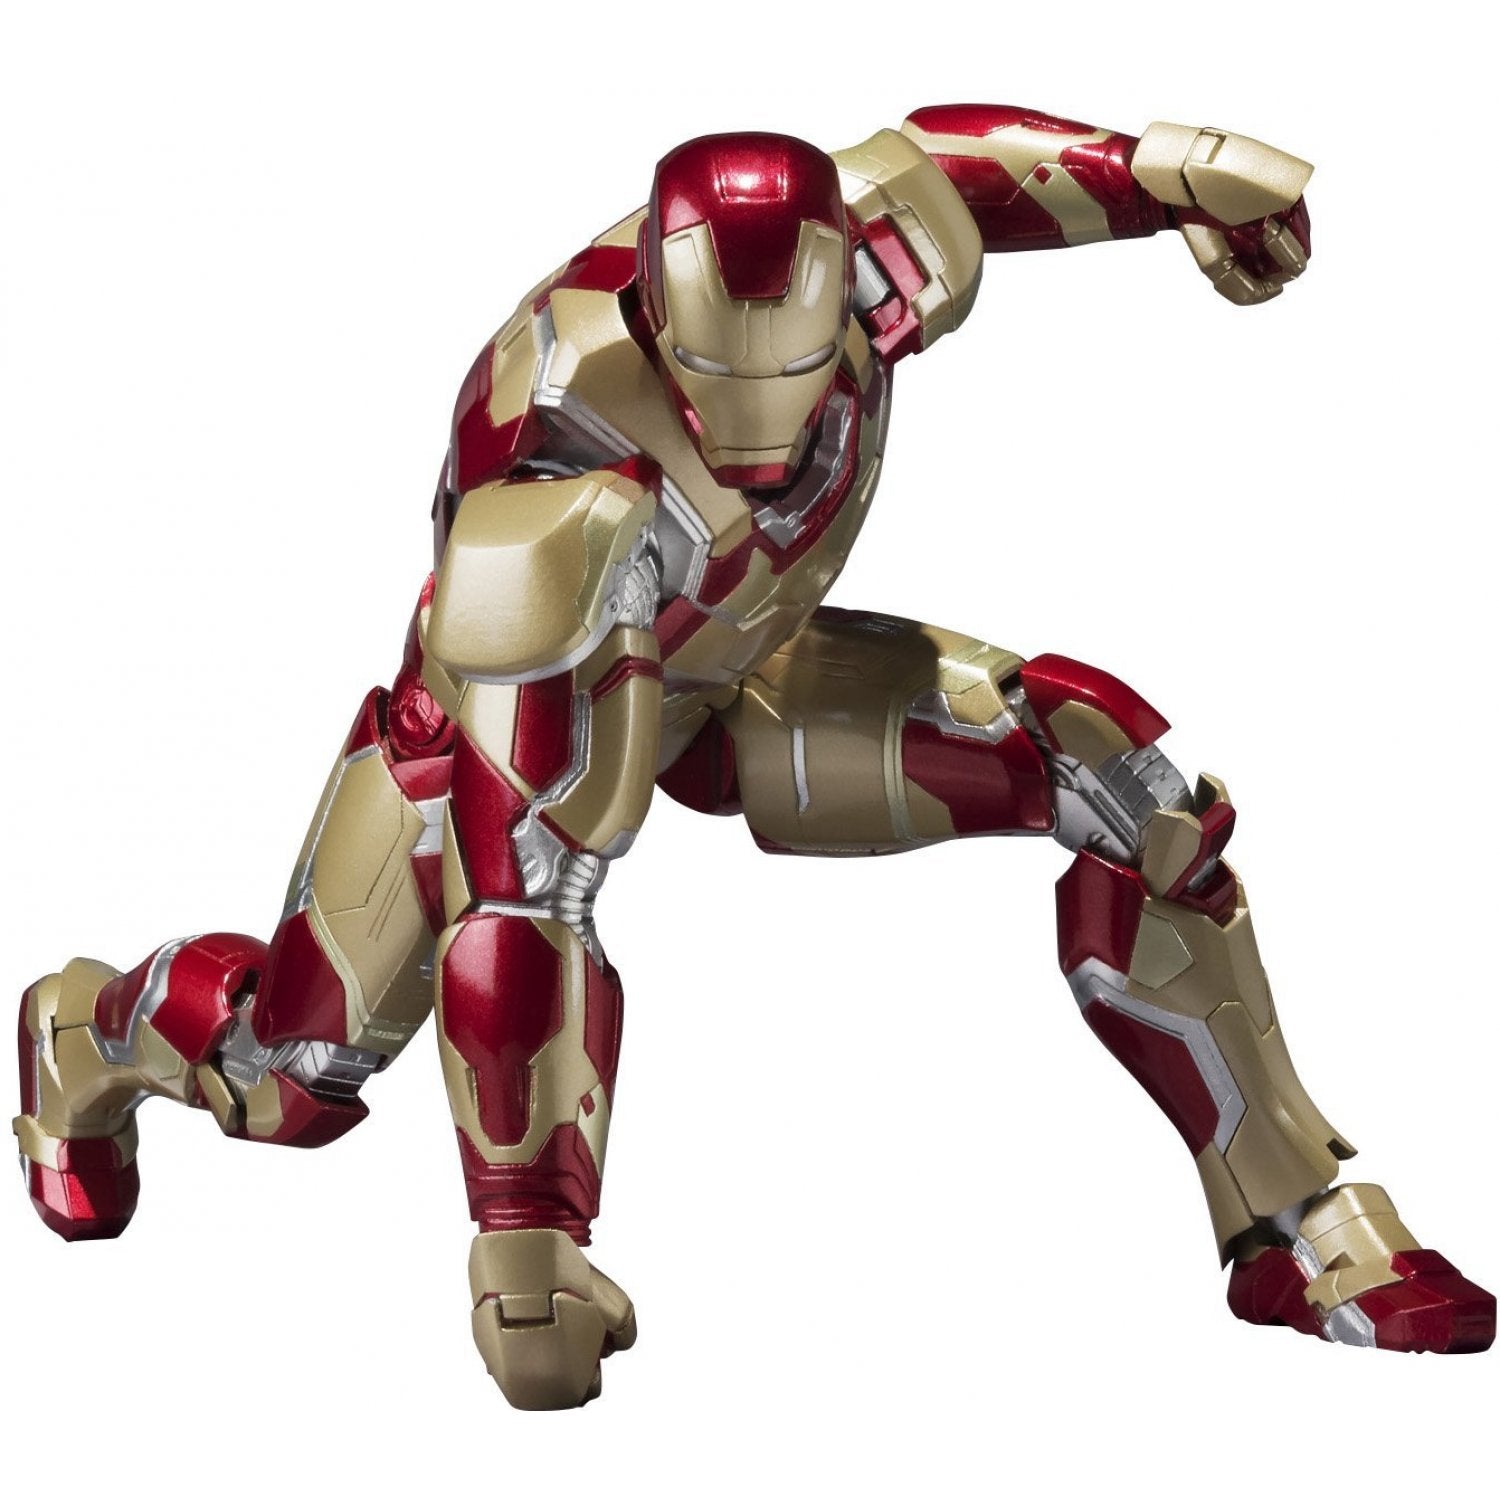 S.H. Figuarts Marvel Iron Man Mark 42 Action Figure